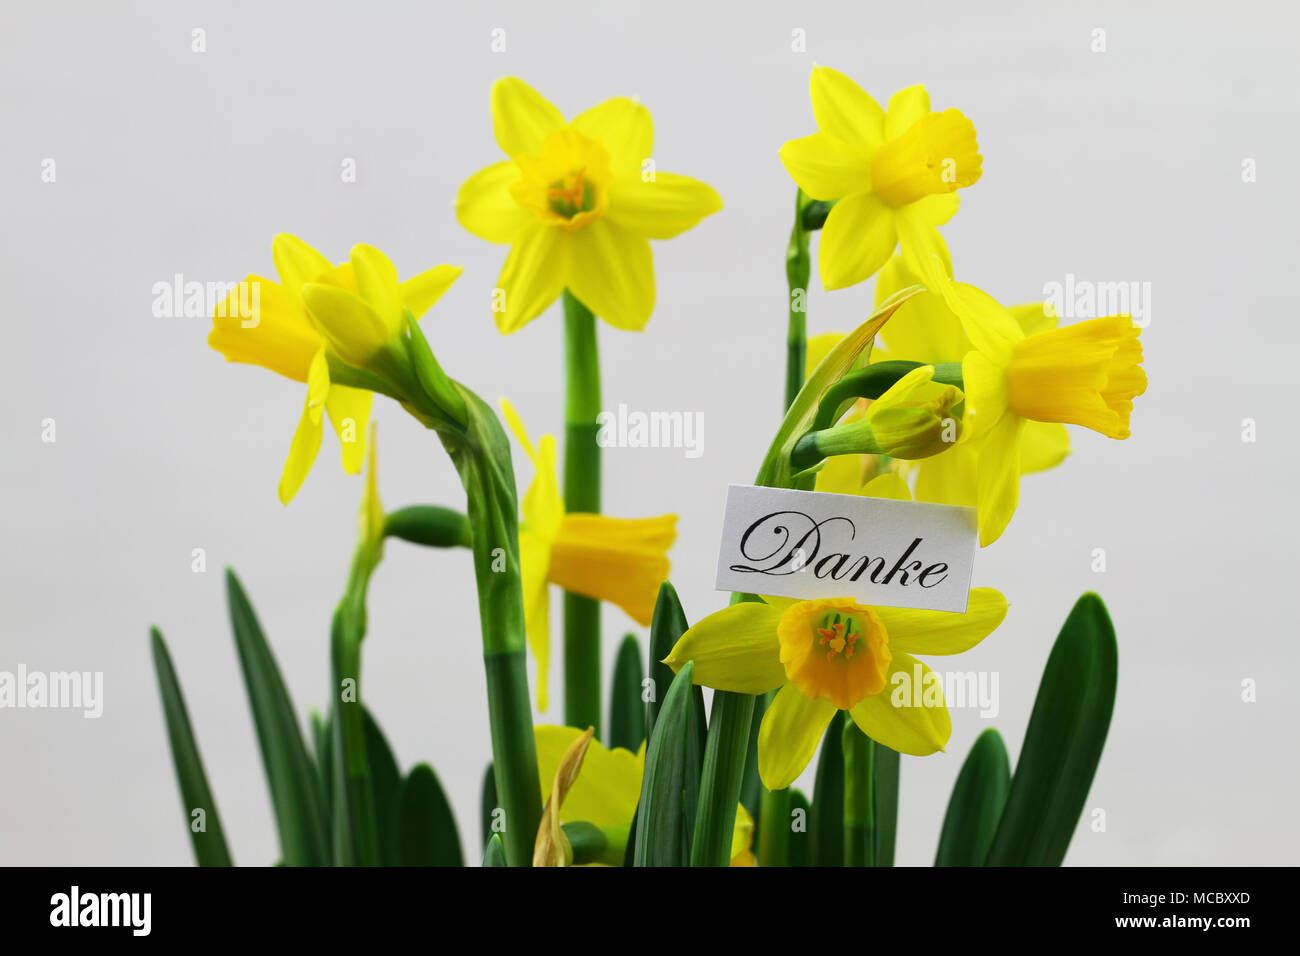 Danke (thank you in German) card with daffodils Stock Photo